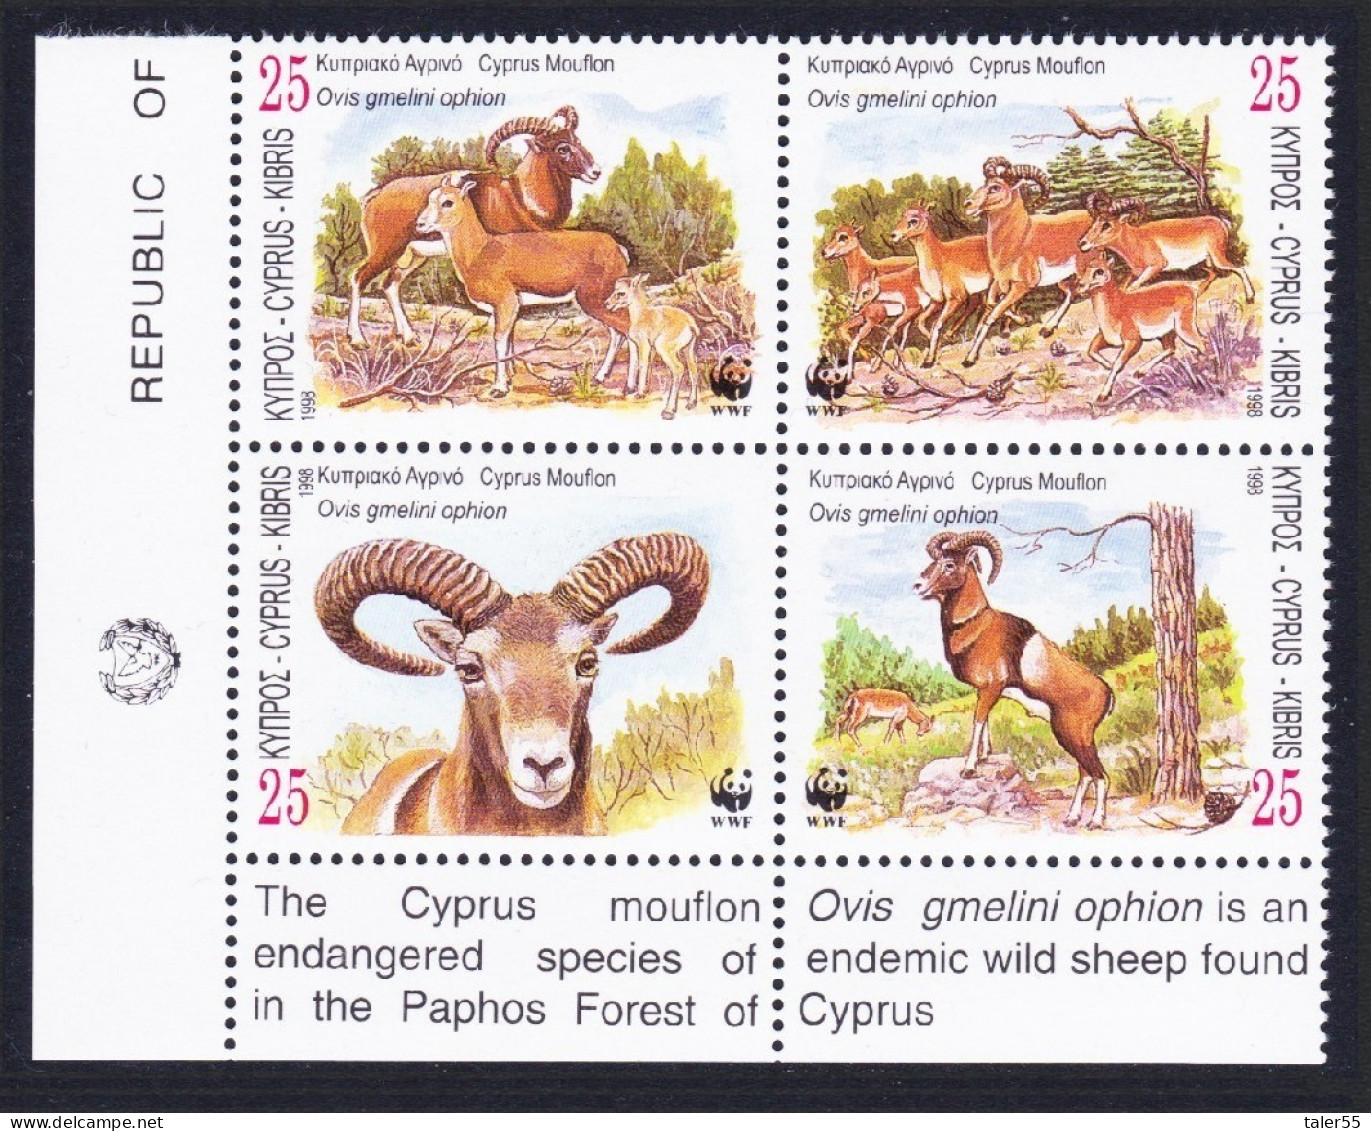 Cyprus WWF Mouflon Corner Block Of 4v With Description 1998 MNH SG#941-944 MI#914-917 Sc#920-923 - Ungebraucht